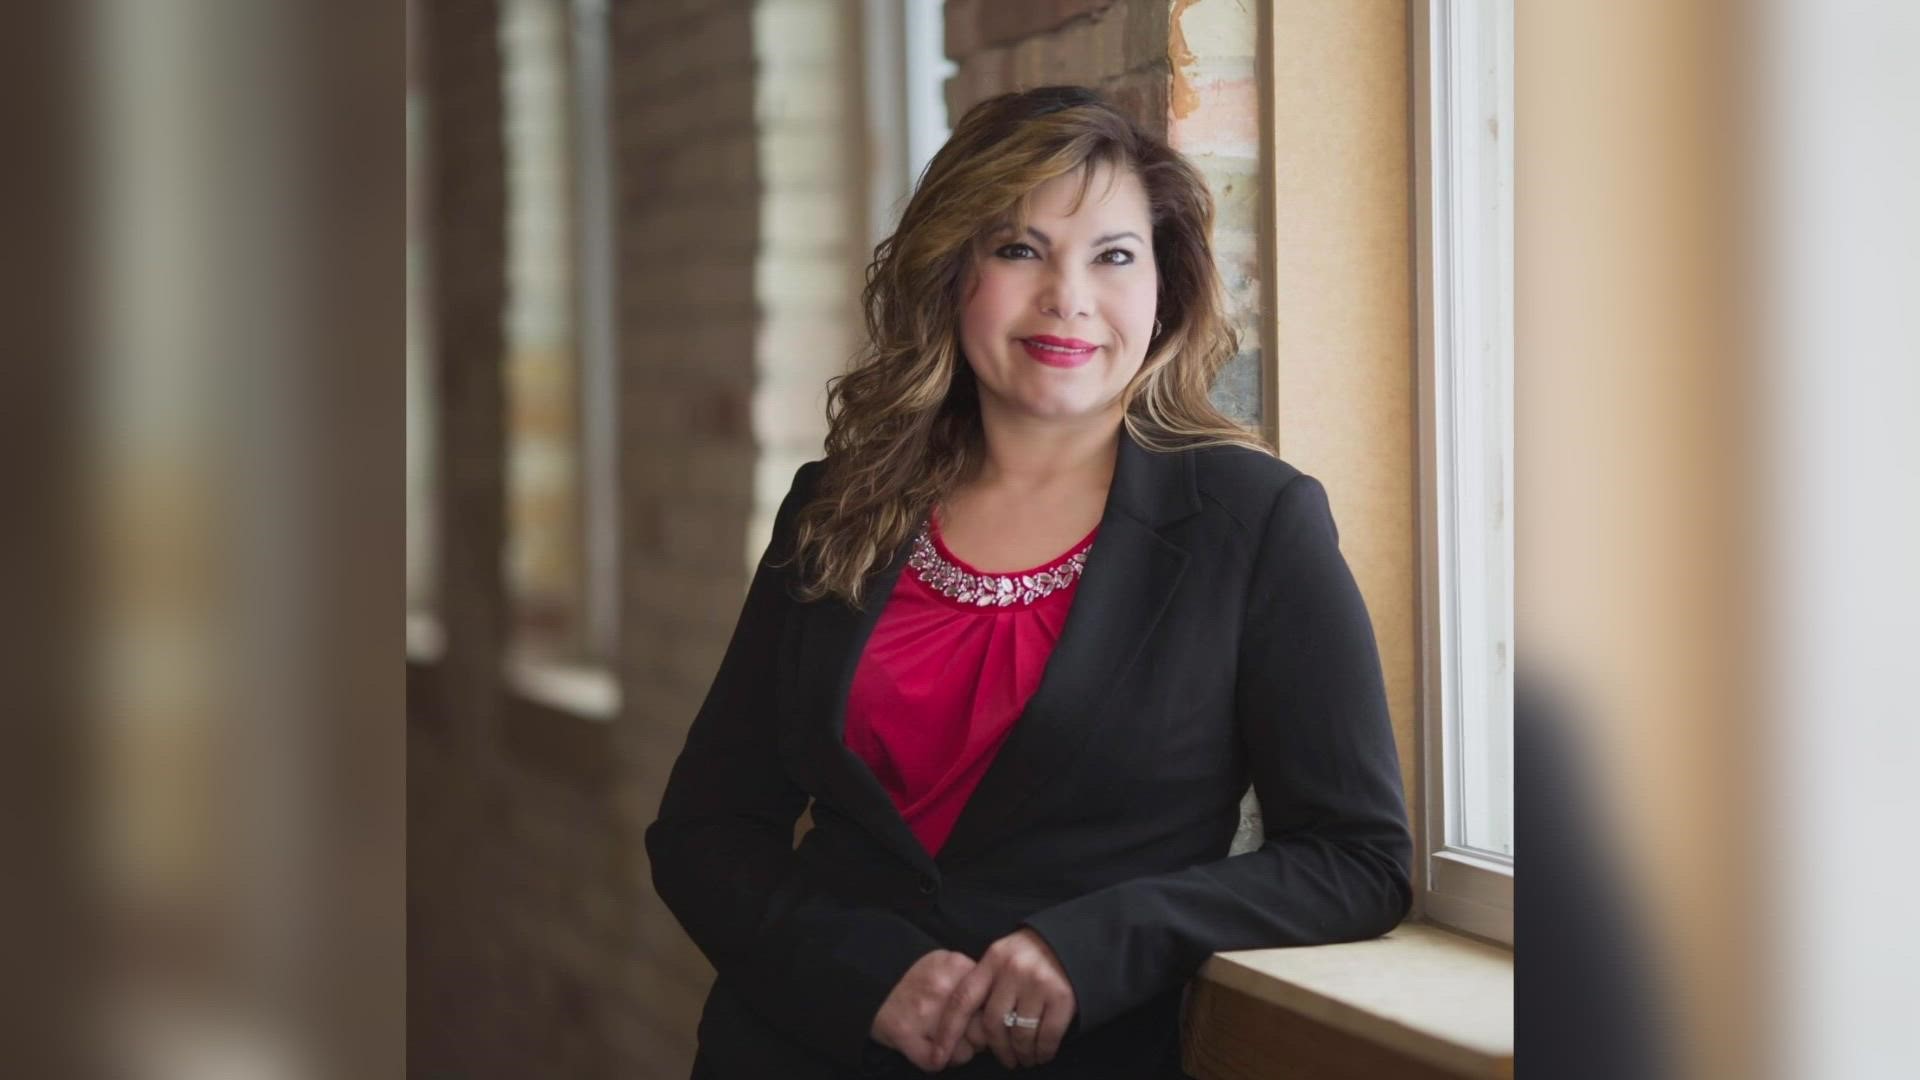 Judge Juanita Bocanegra hopes her story will inspire others to dream big.